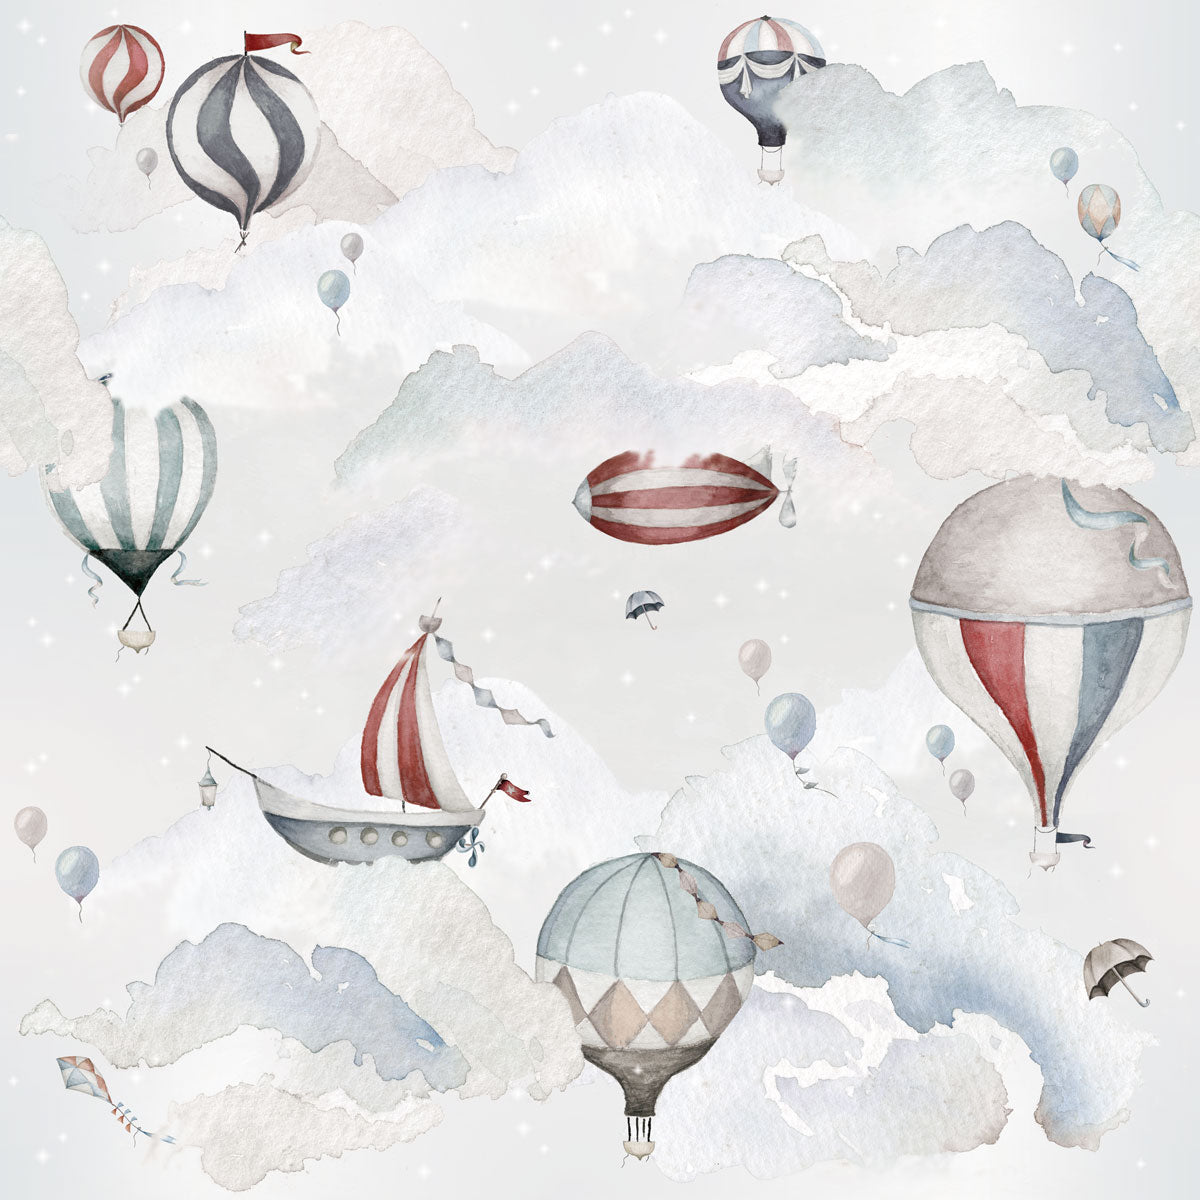 Balloons Adventure, Wallpaper